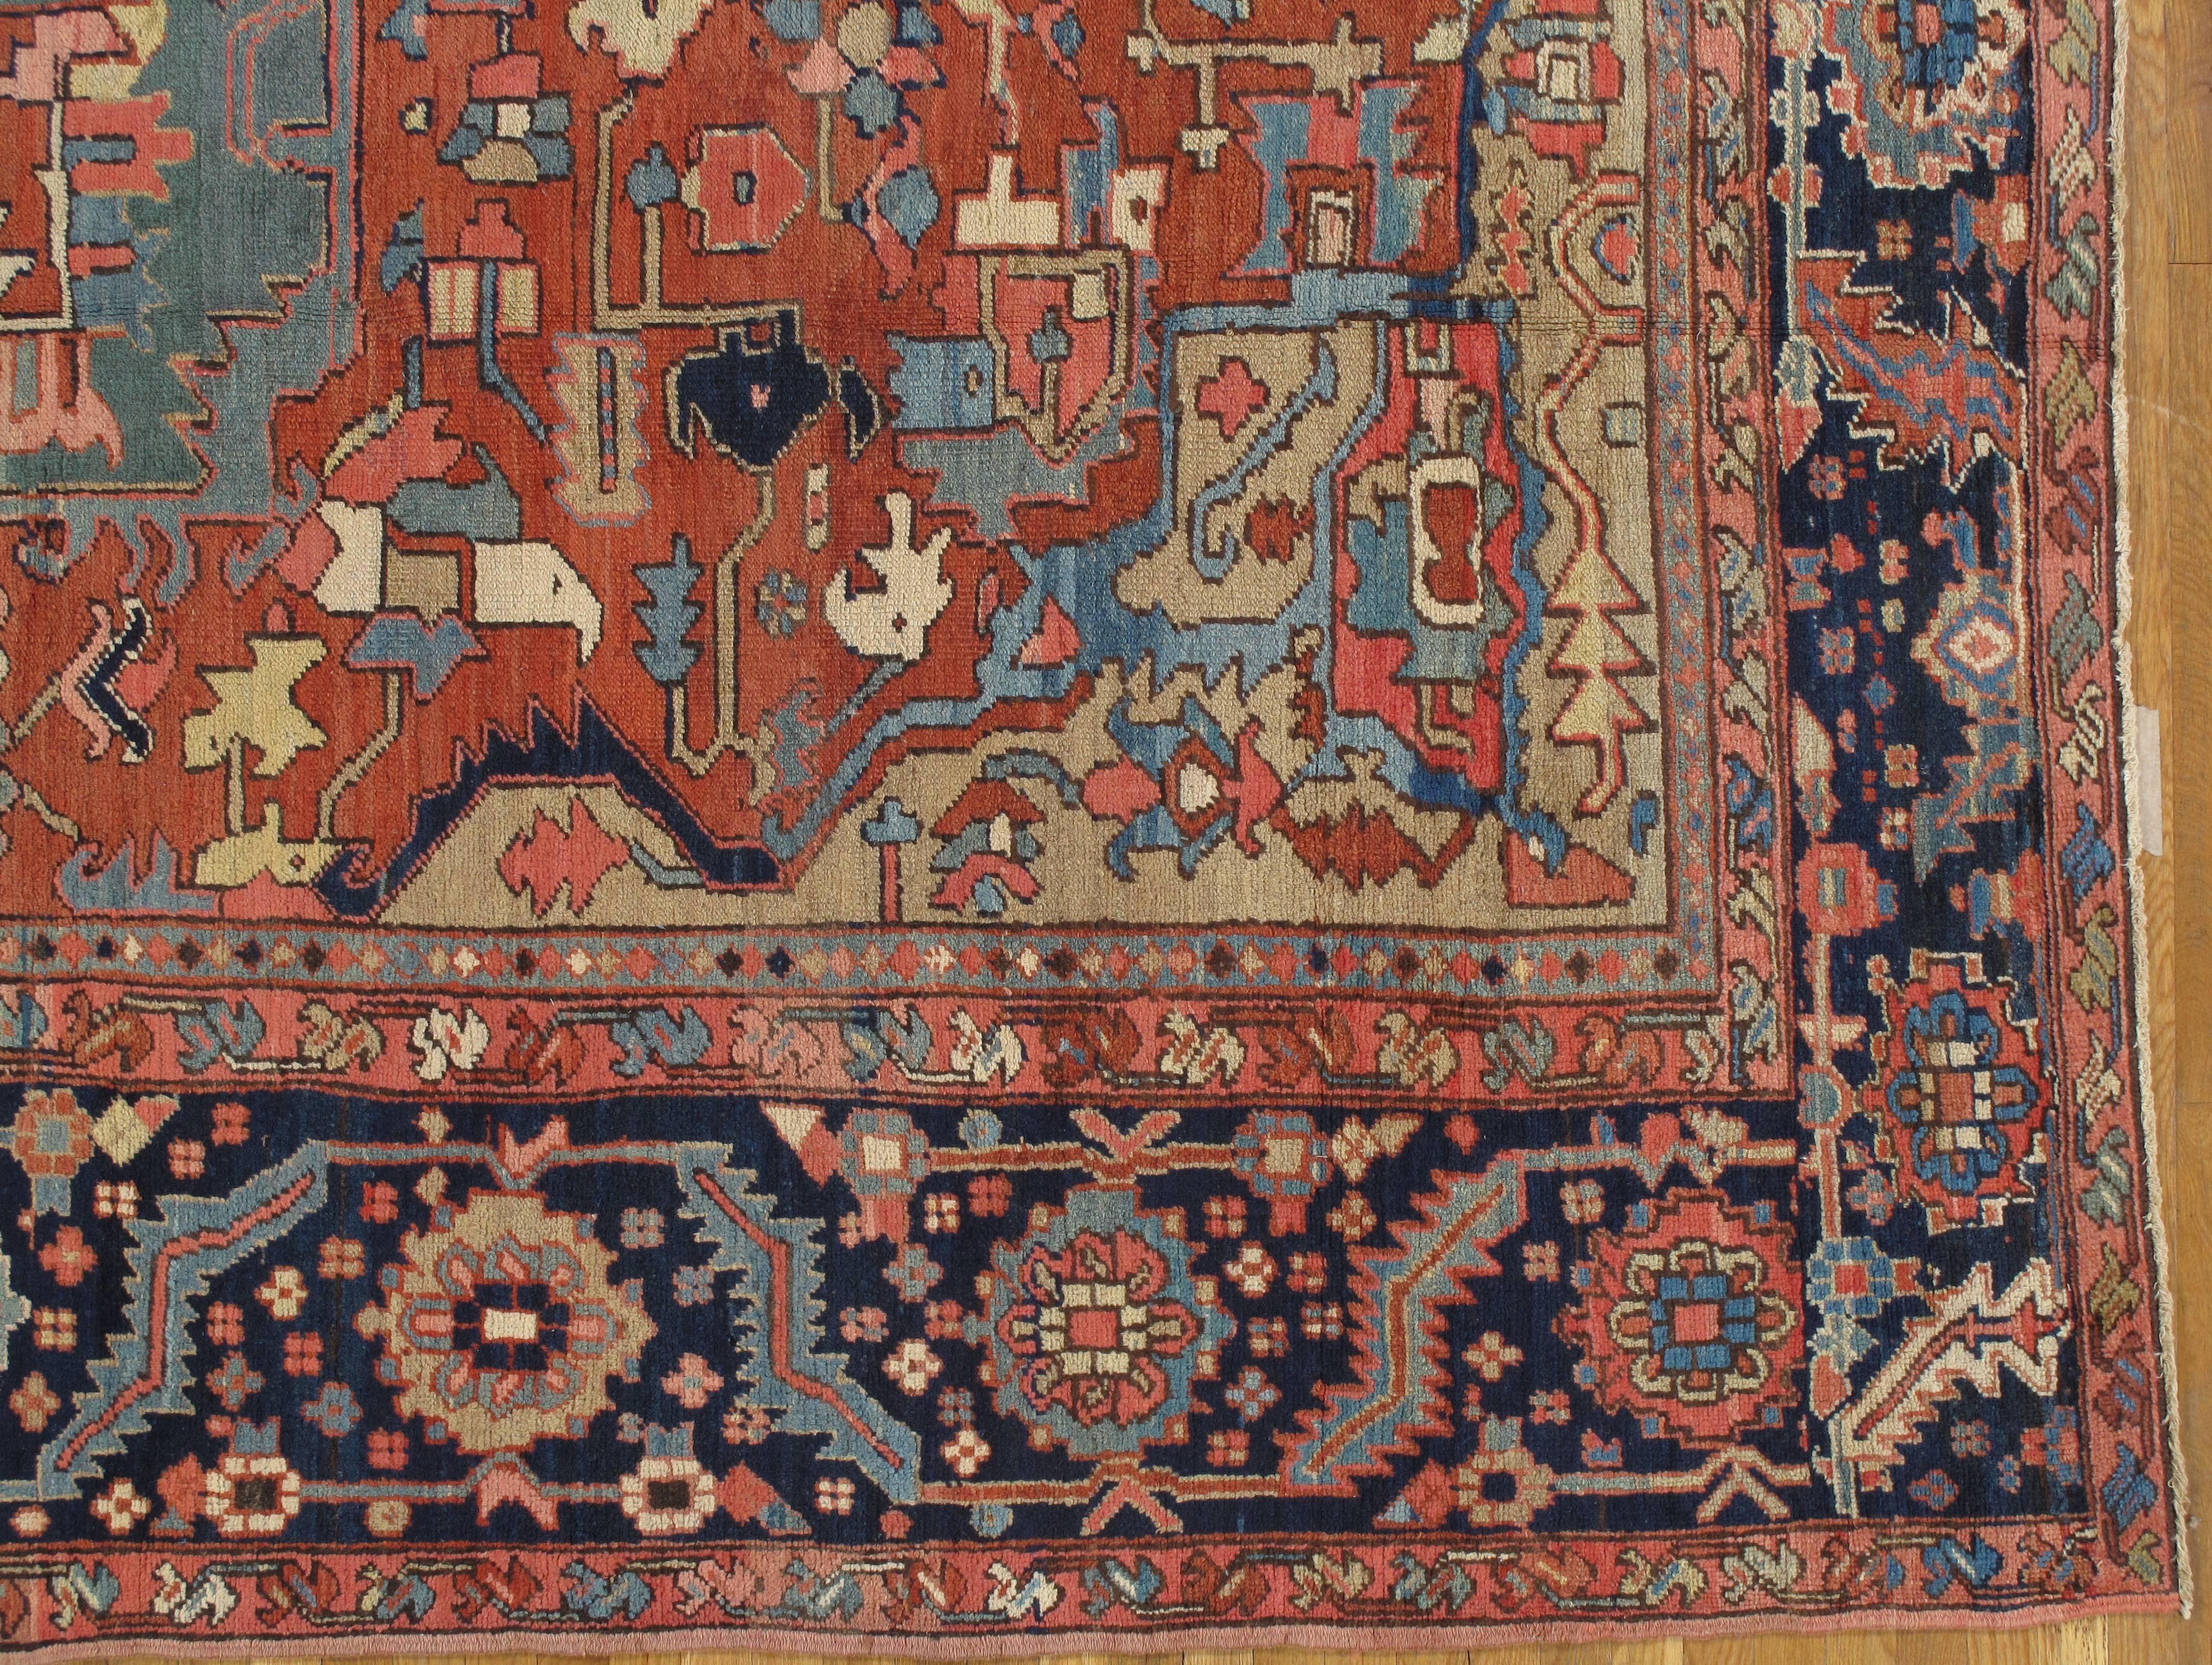 Hand-Knotted Antique Persian Heriz Carpet, Handmade Wool Oriental Rug, Rust, Navy, Light Blue